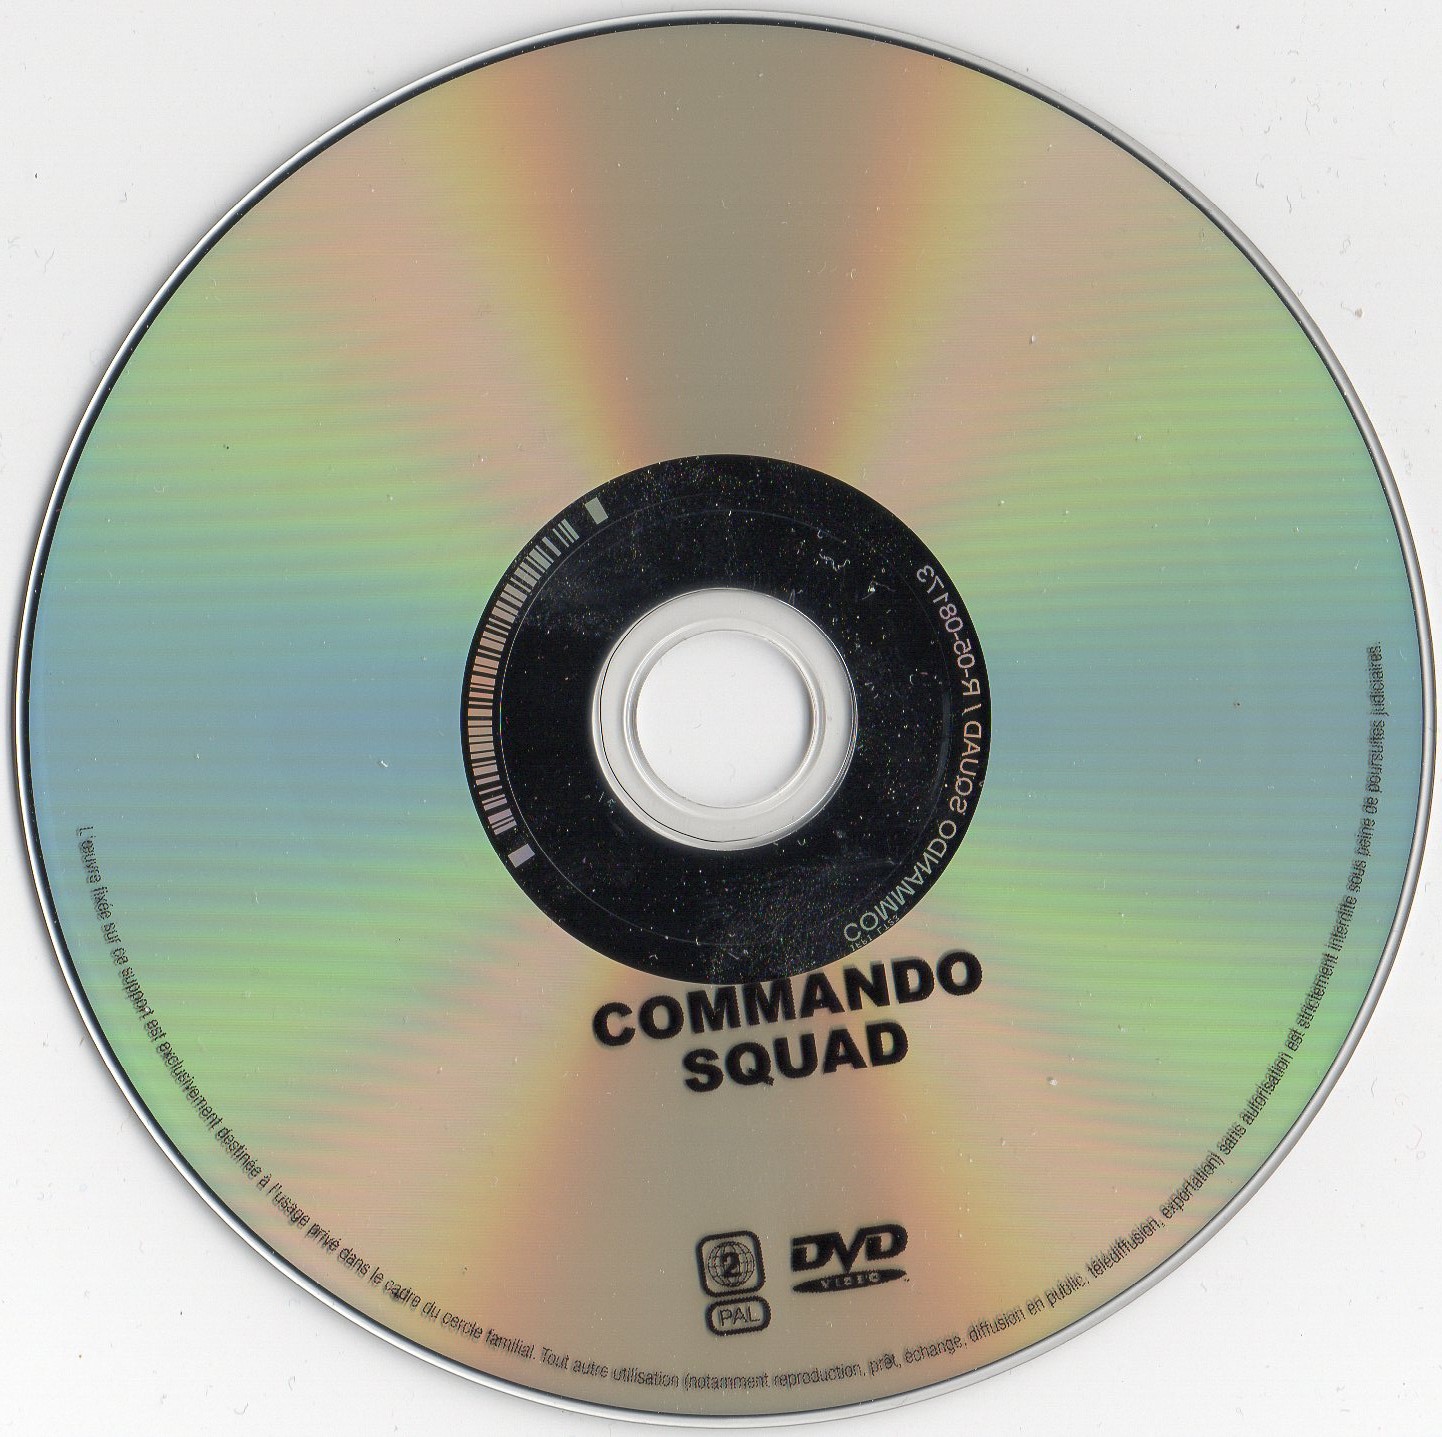 Commando squad